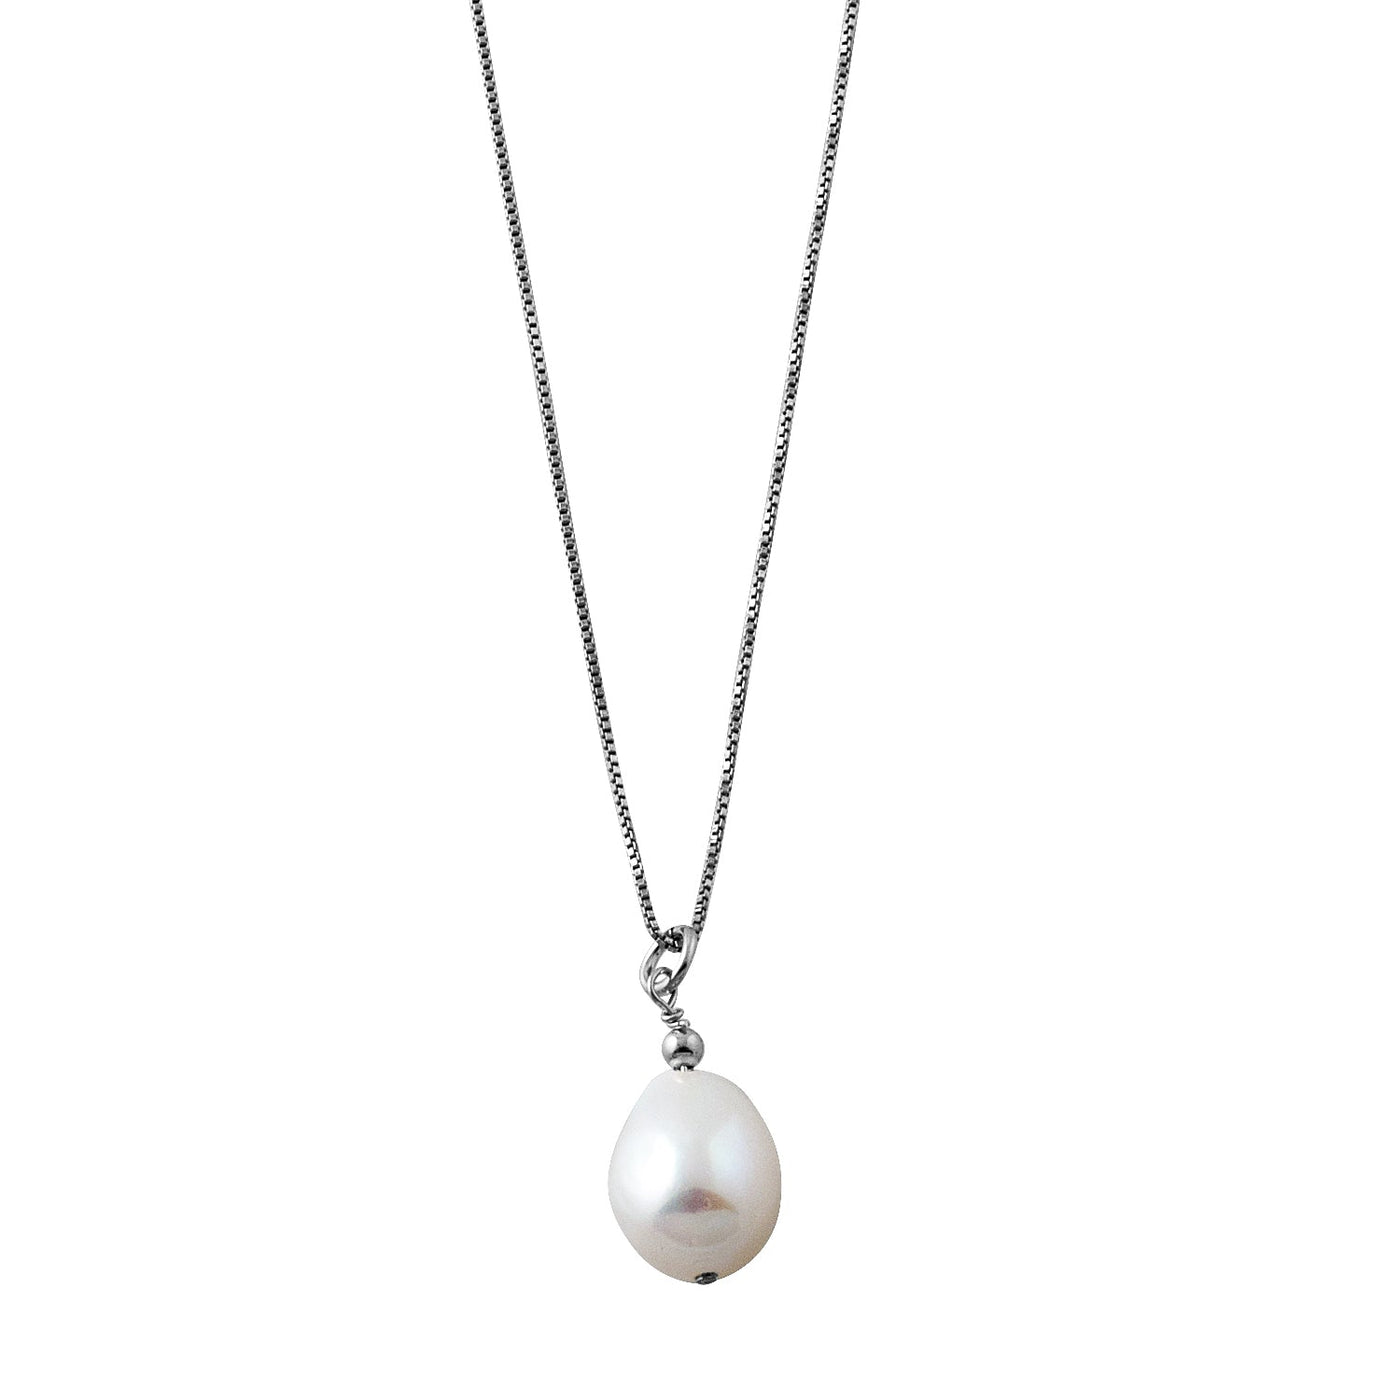 Von Treskow Fine Box Chain Necklace with Baroque Pearl